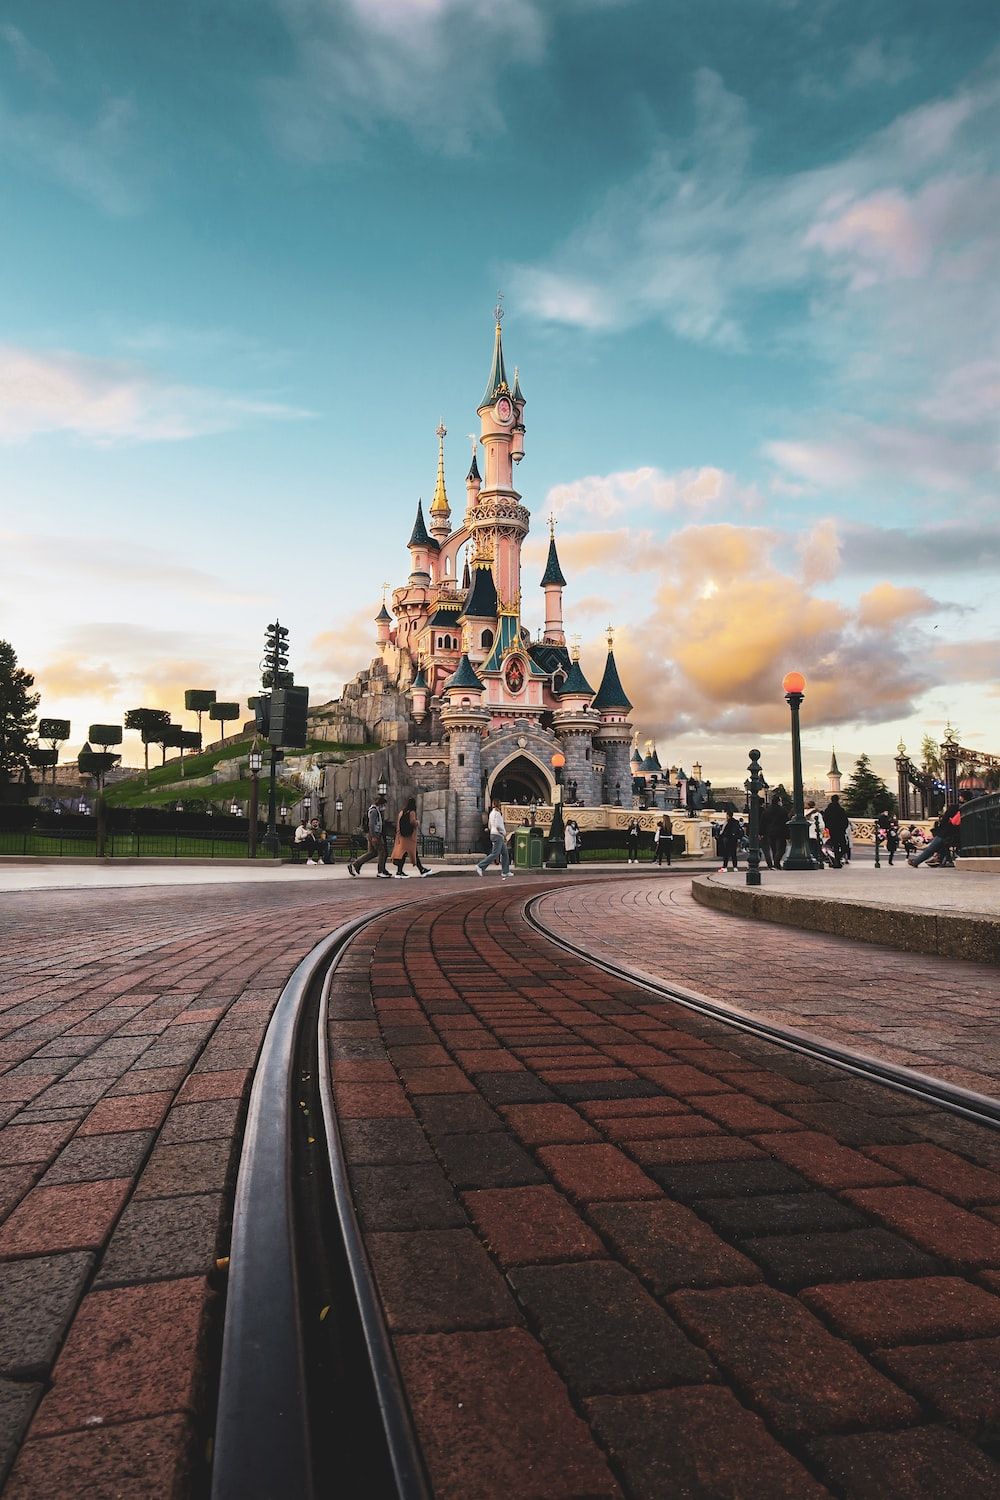 Disney Castle Picture. Download Free Image